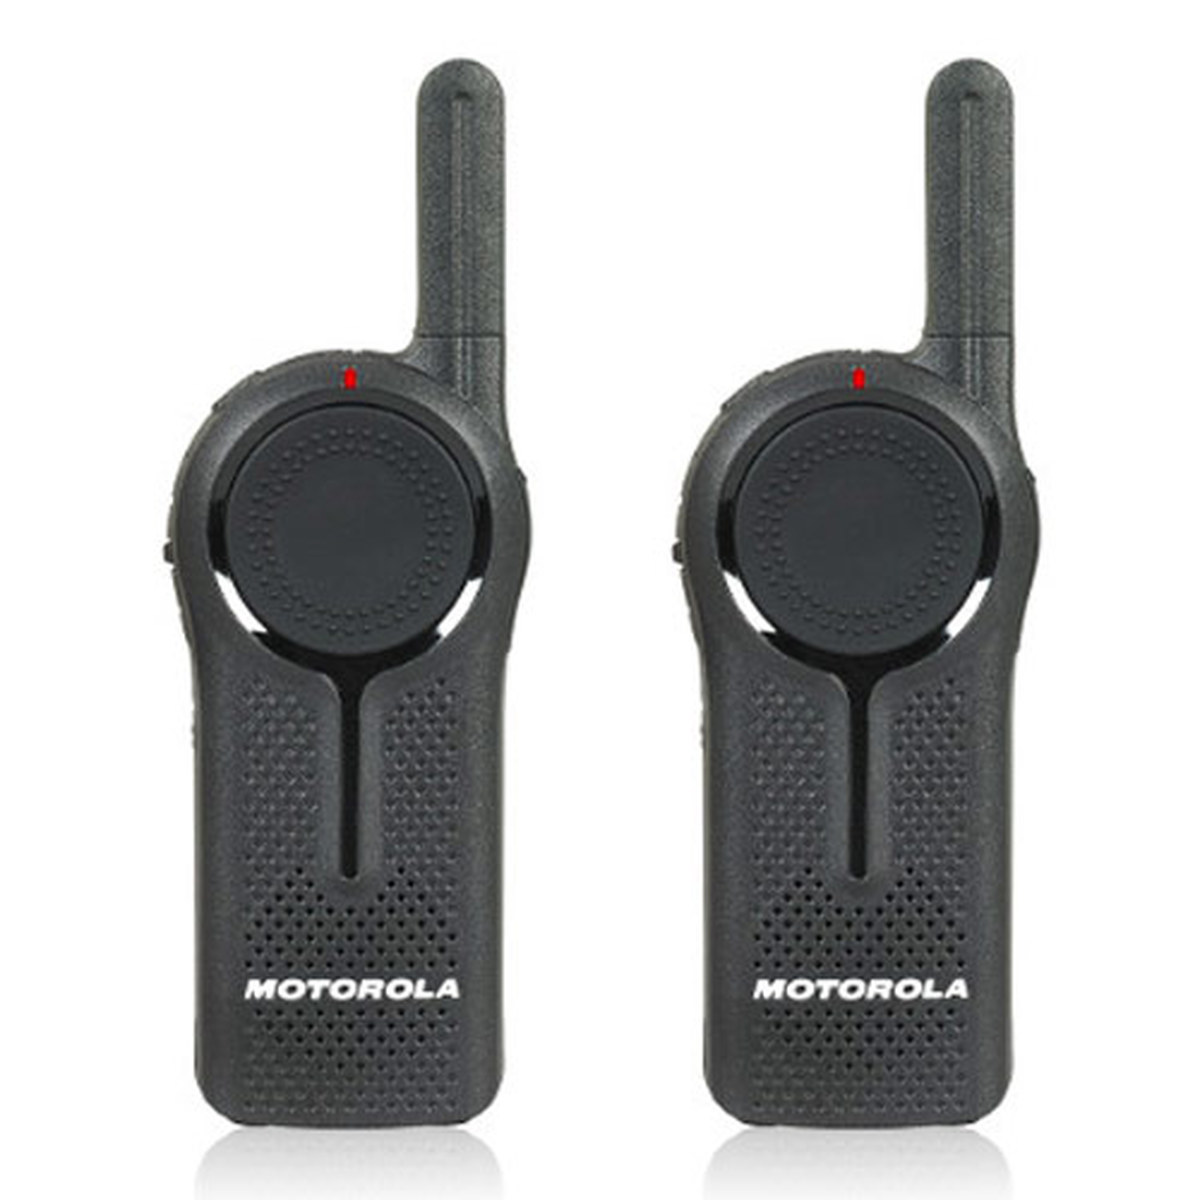 Radio Motorola DLR Empresarial Digital DLR1060 900MHz